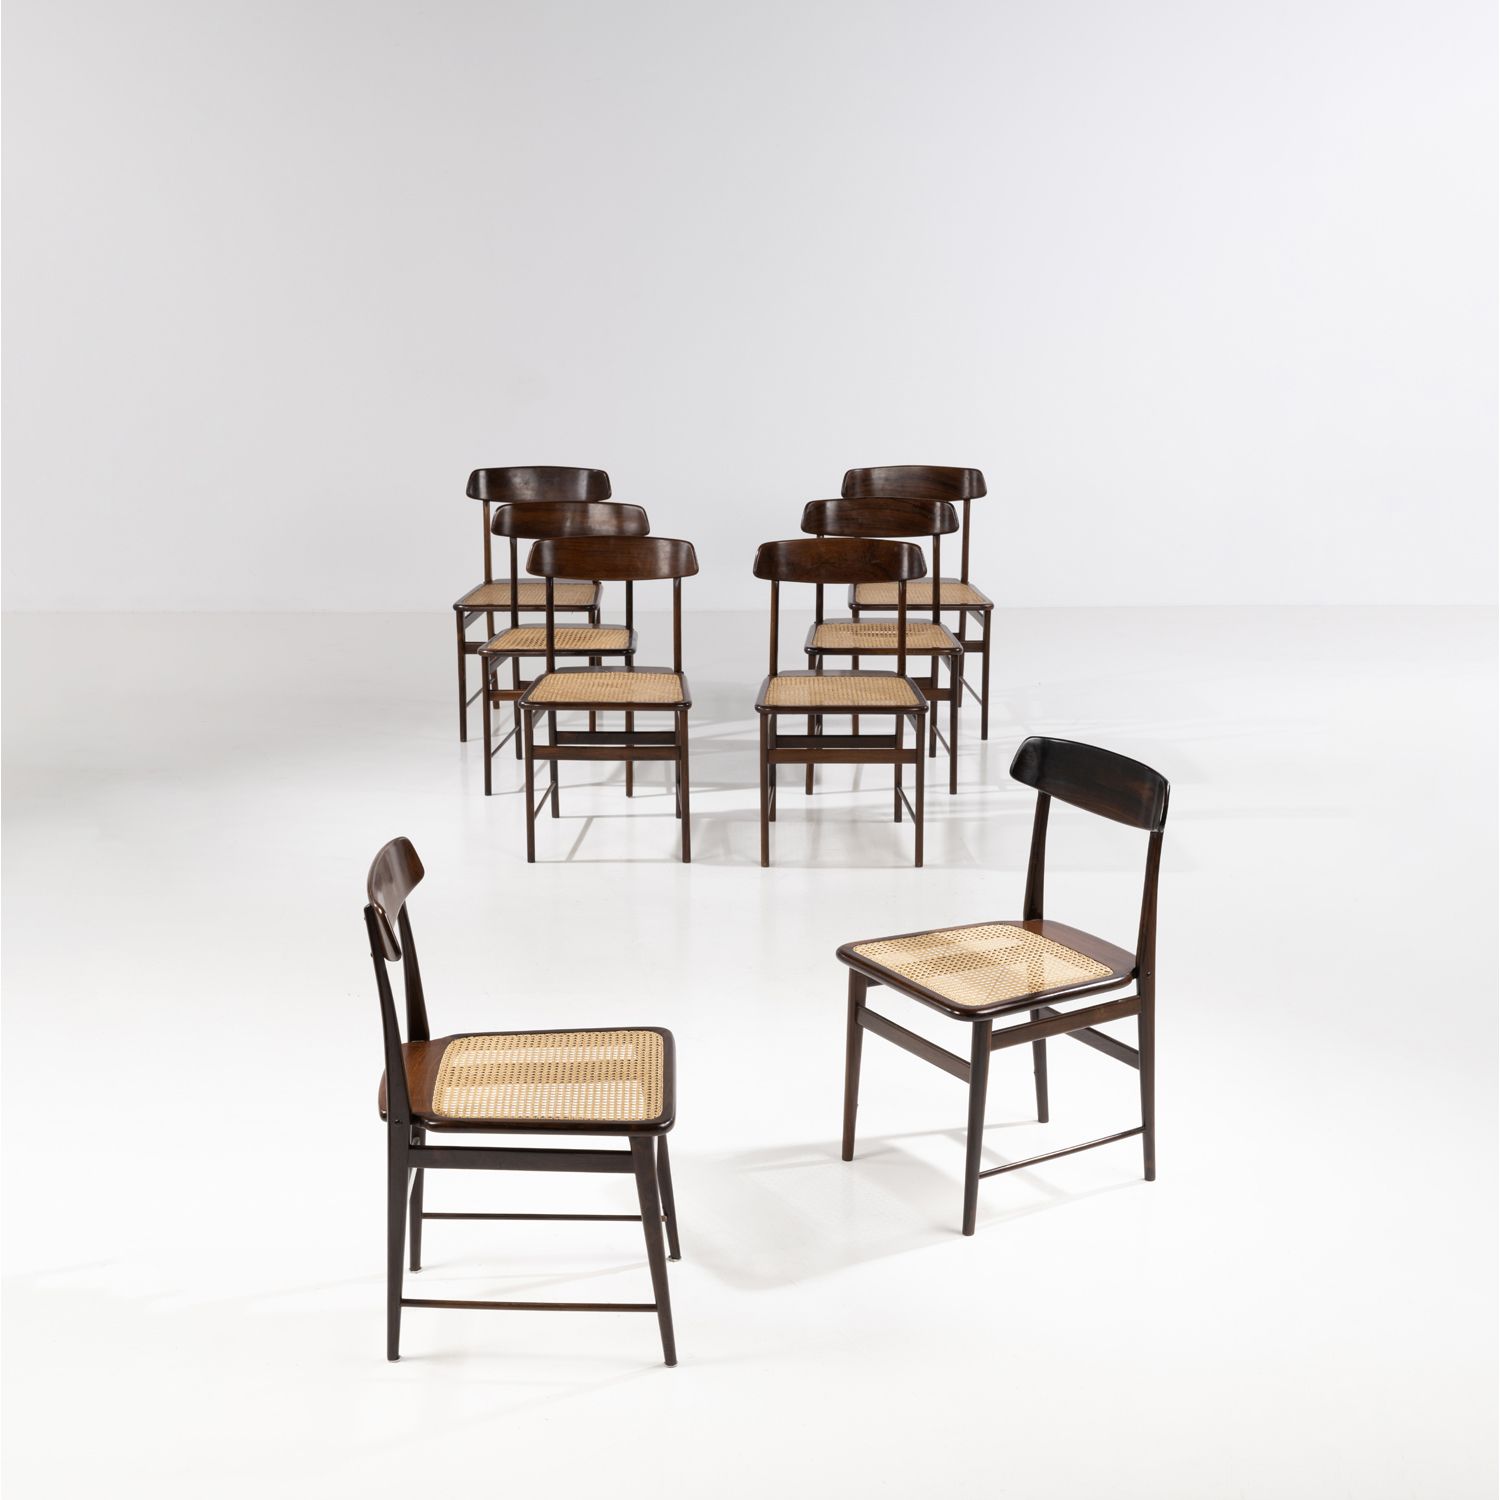 Null Sergio Rodrigues (1927-2014)

Cadeira Lucio Costa

Set of eight chairs

Imb&hellip;